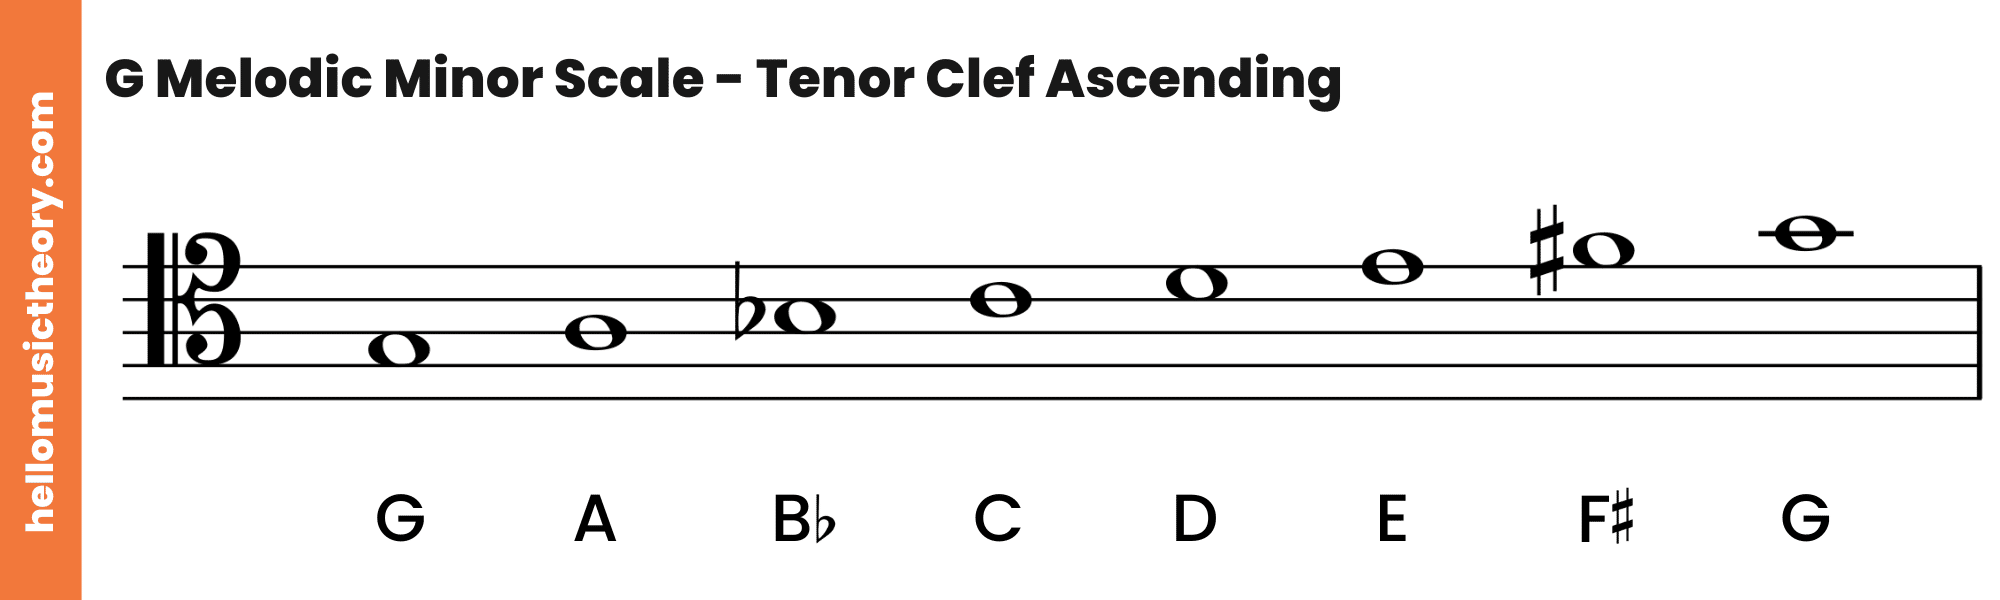 G Melodic Minor Scale Tenor Clef Ascending